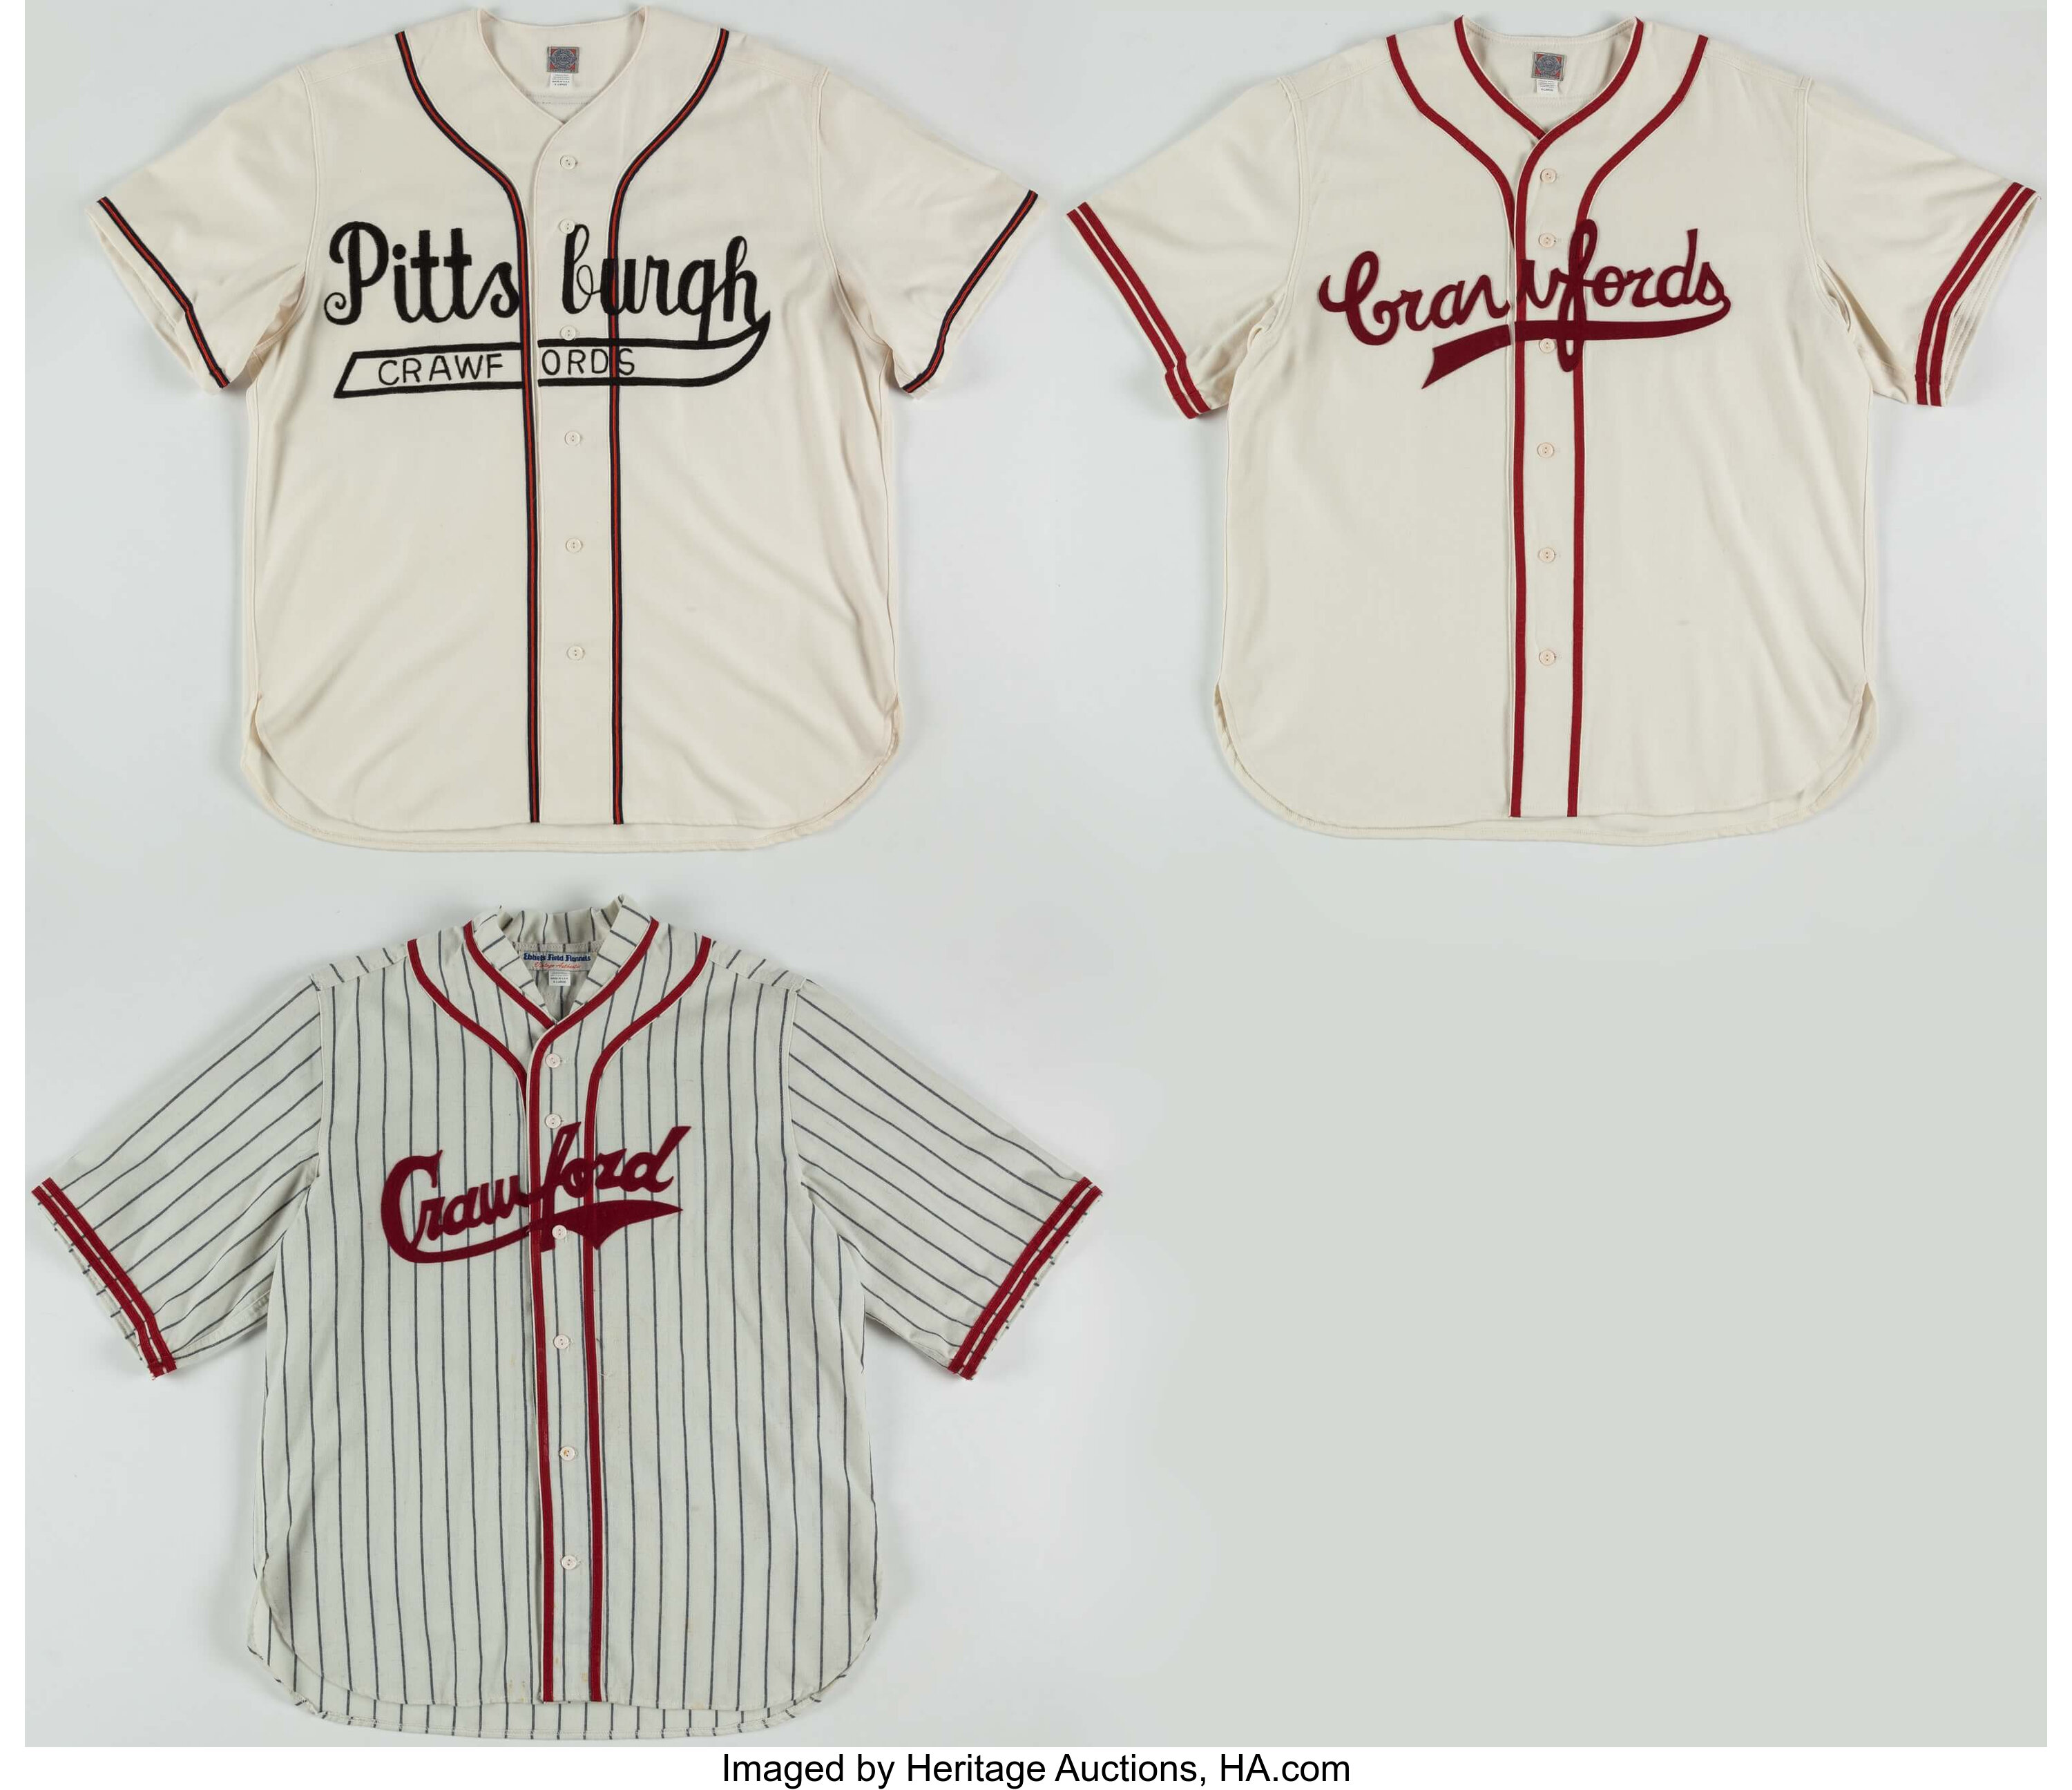 Pittsburgh Crawfords NLB Jersey - Cream (1944) - XL - Royal Retros